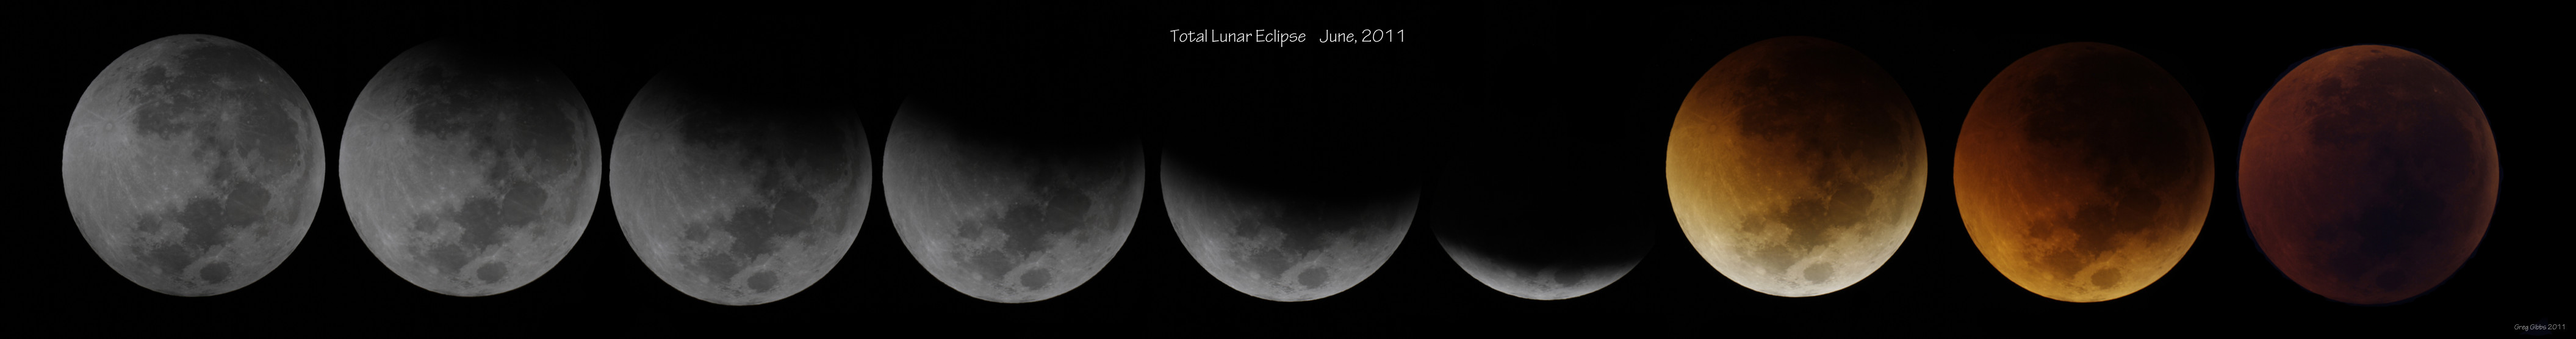 Lunar Eclipse 2011 Timelapse